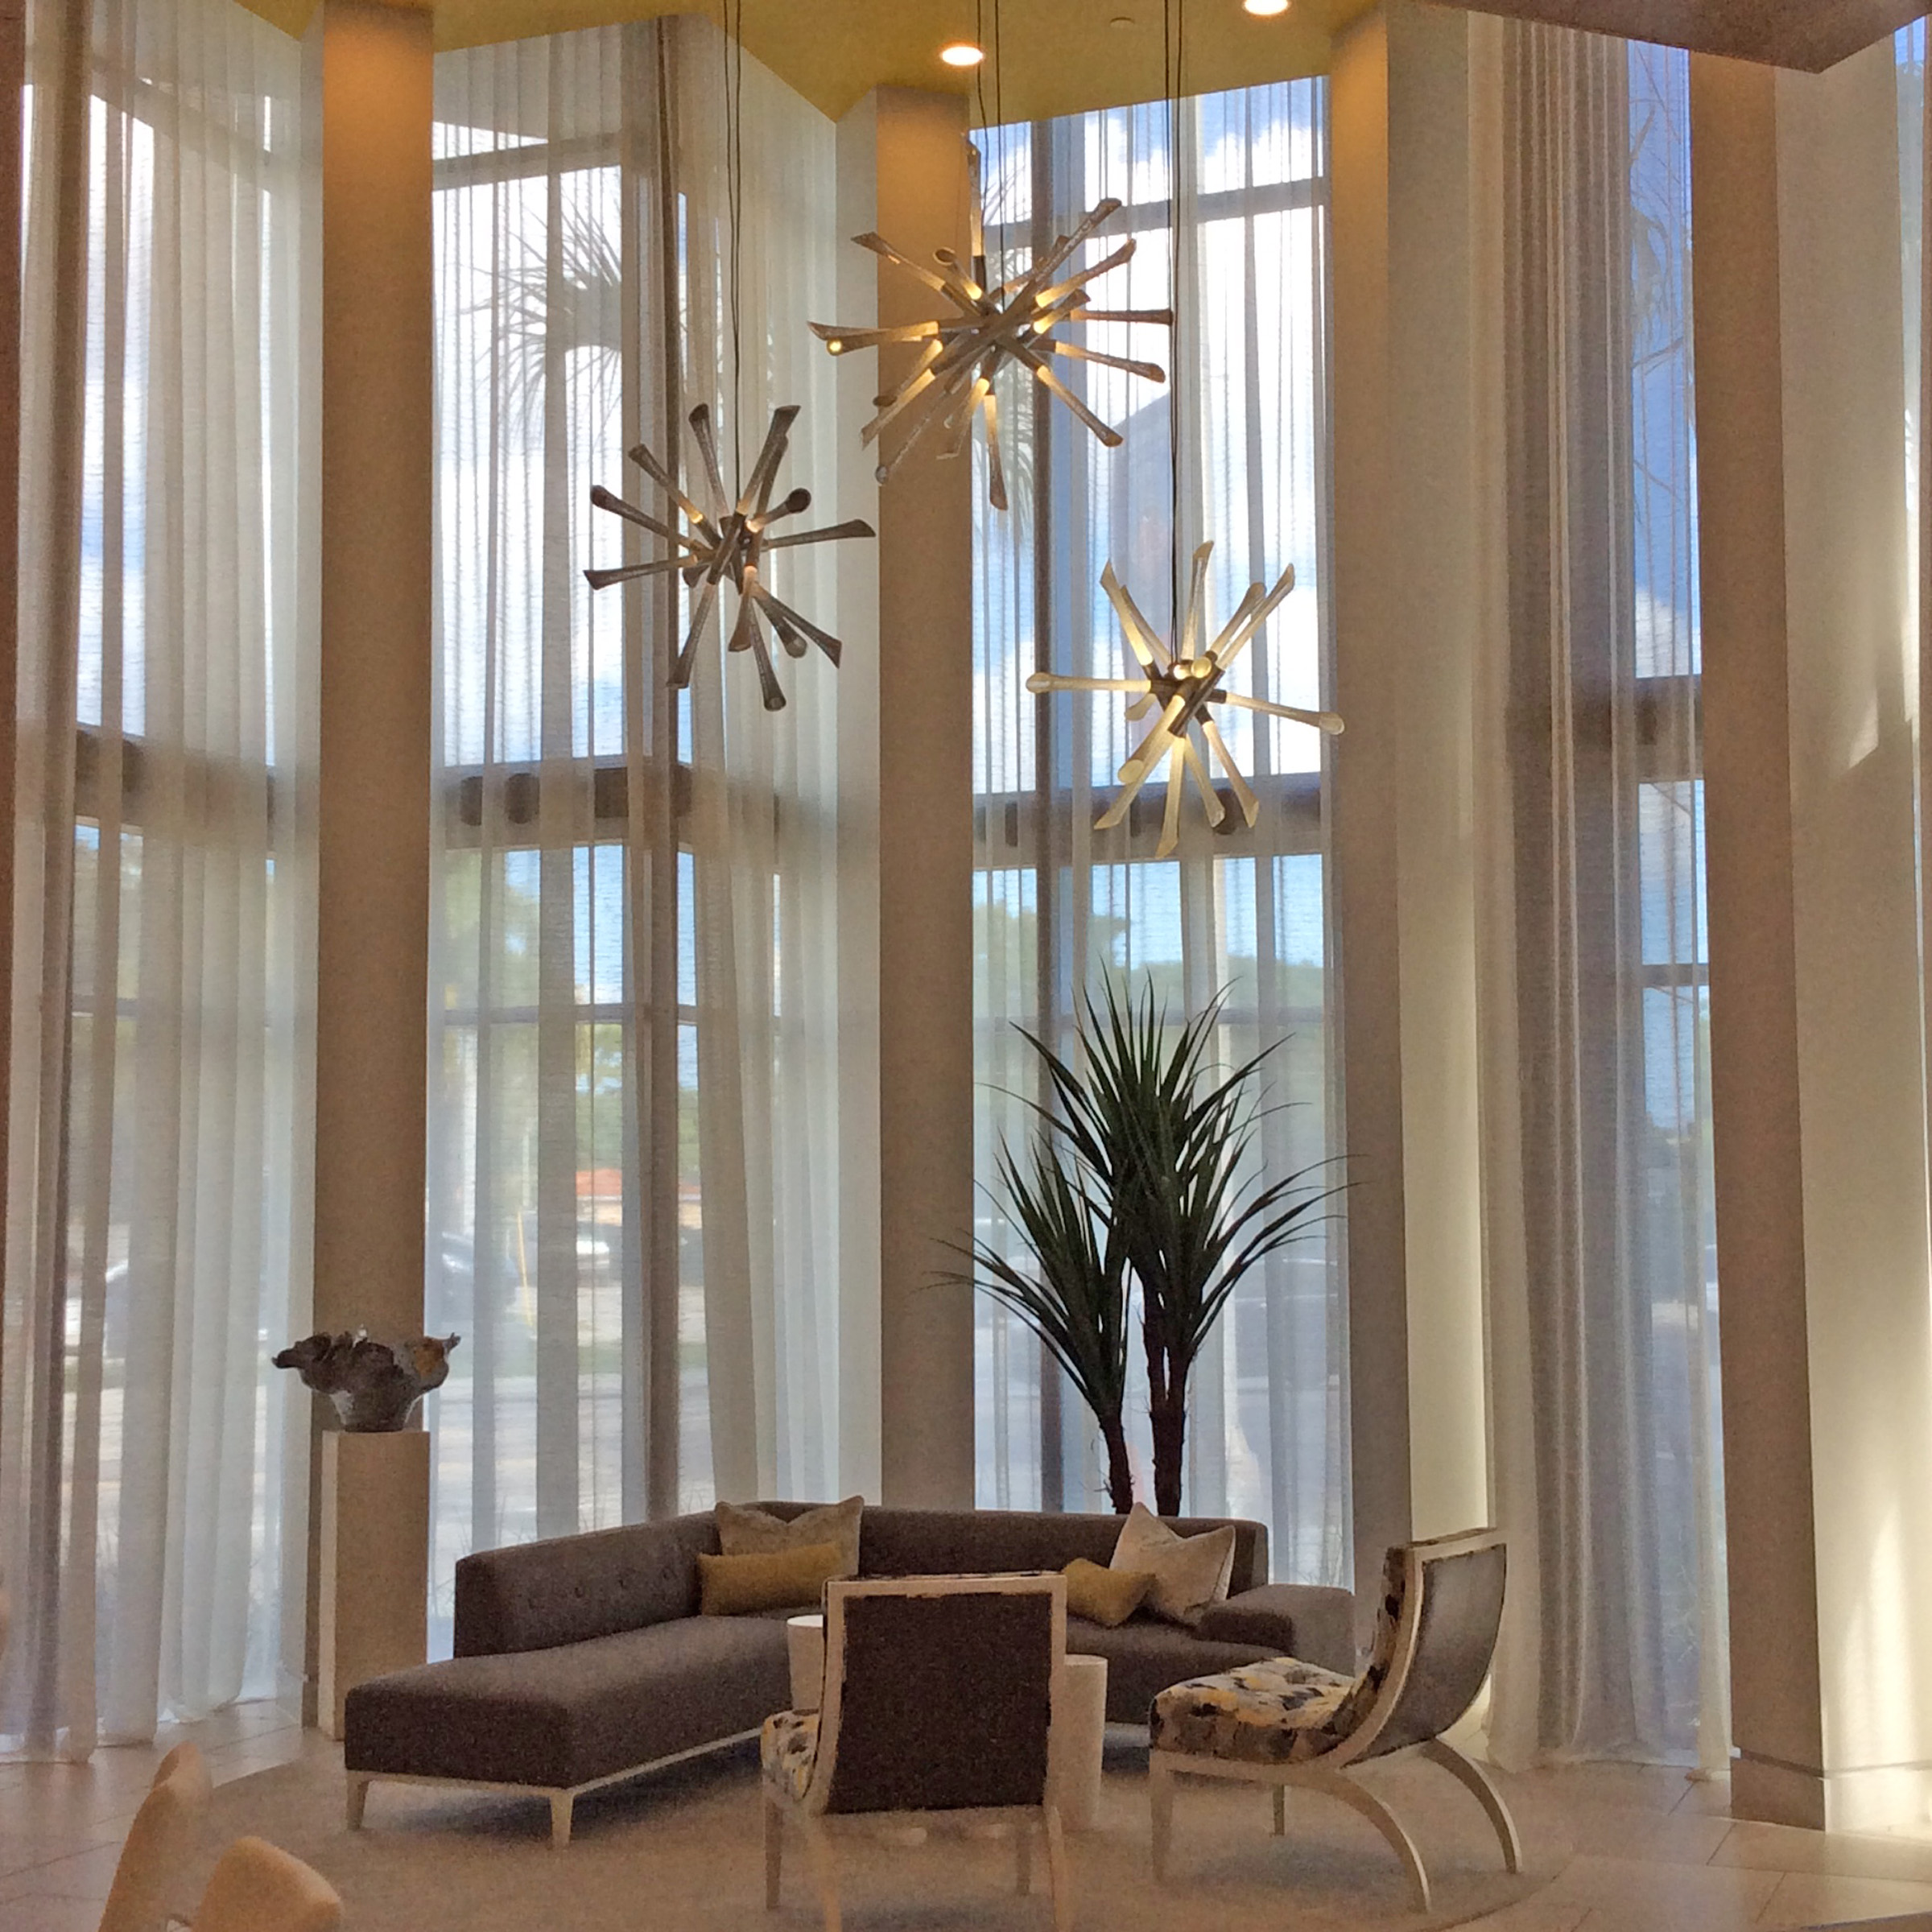 Foyer by Beasley & Henley Interior Design